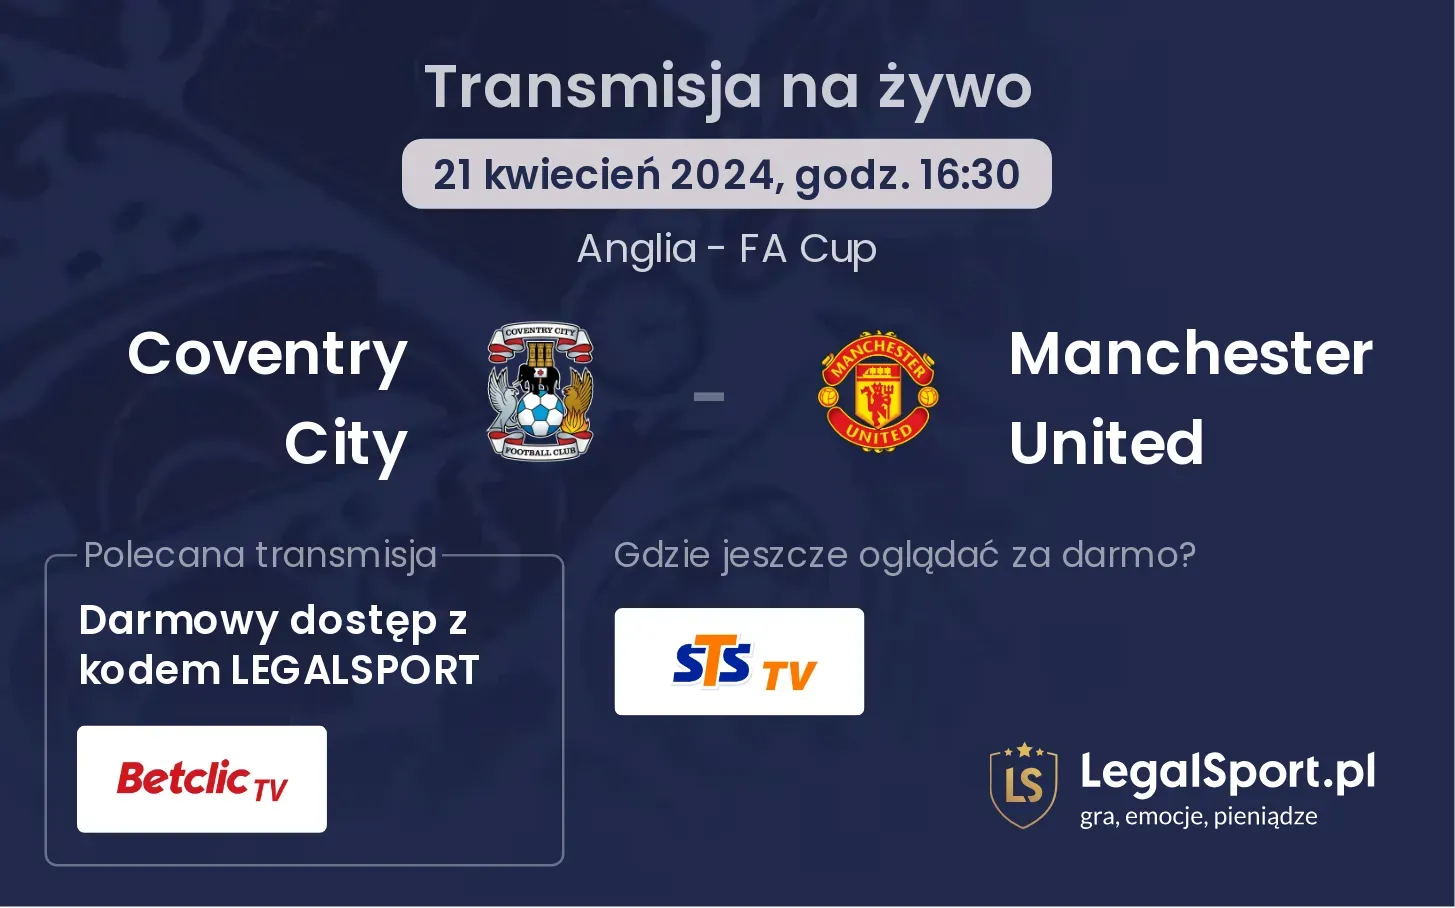 Coventry City - Manchester United transmisja na żywo